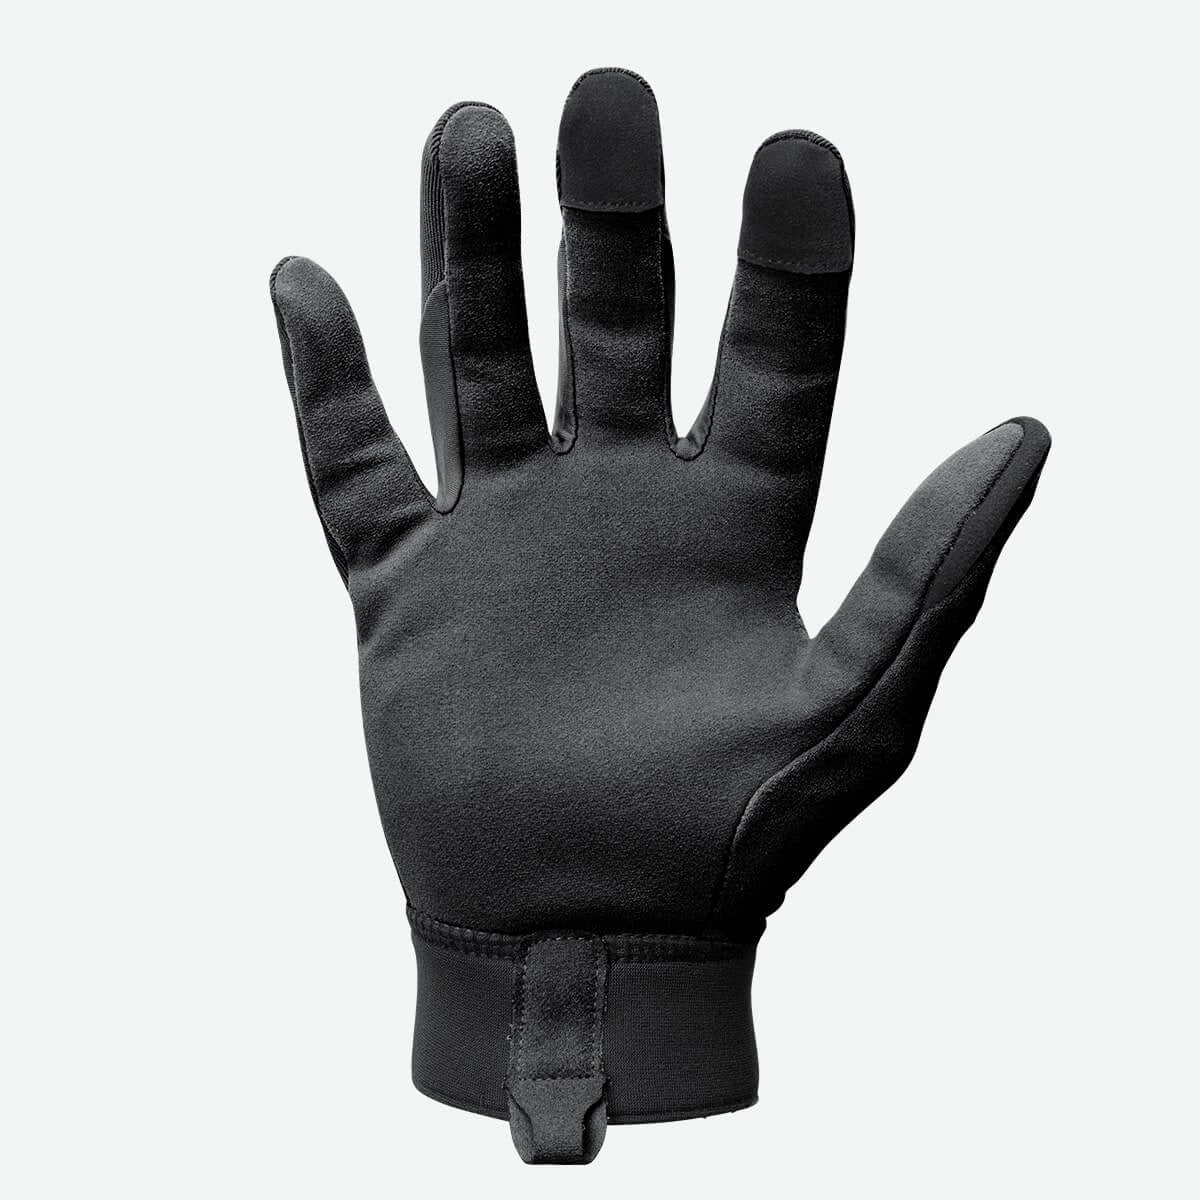 Magpul Technical Glove 2.0 Black Large